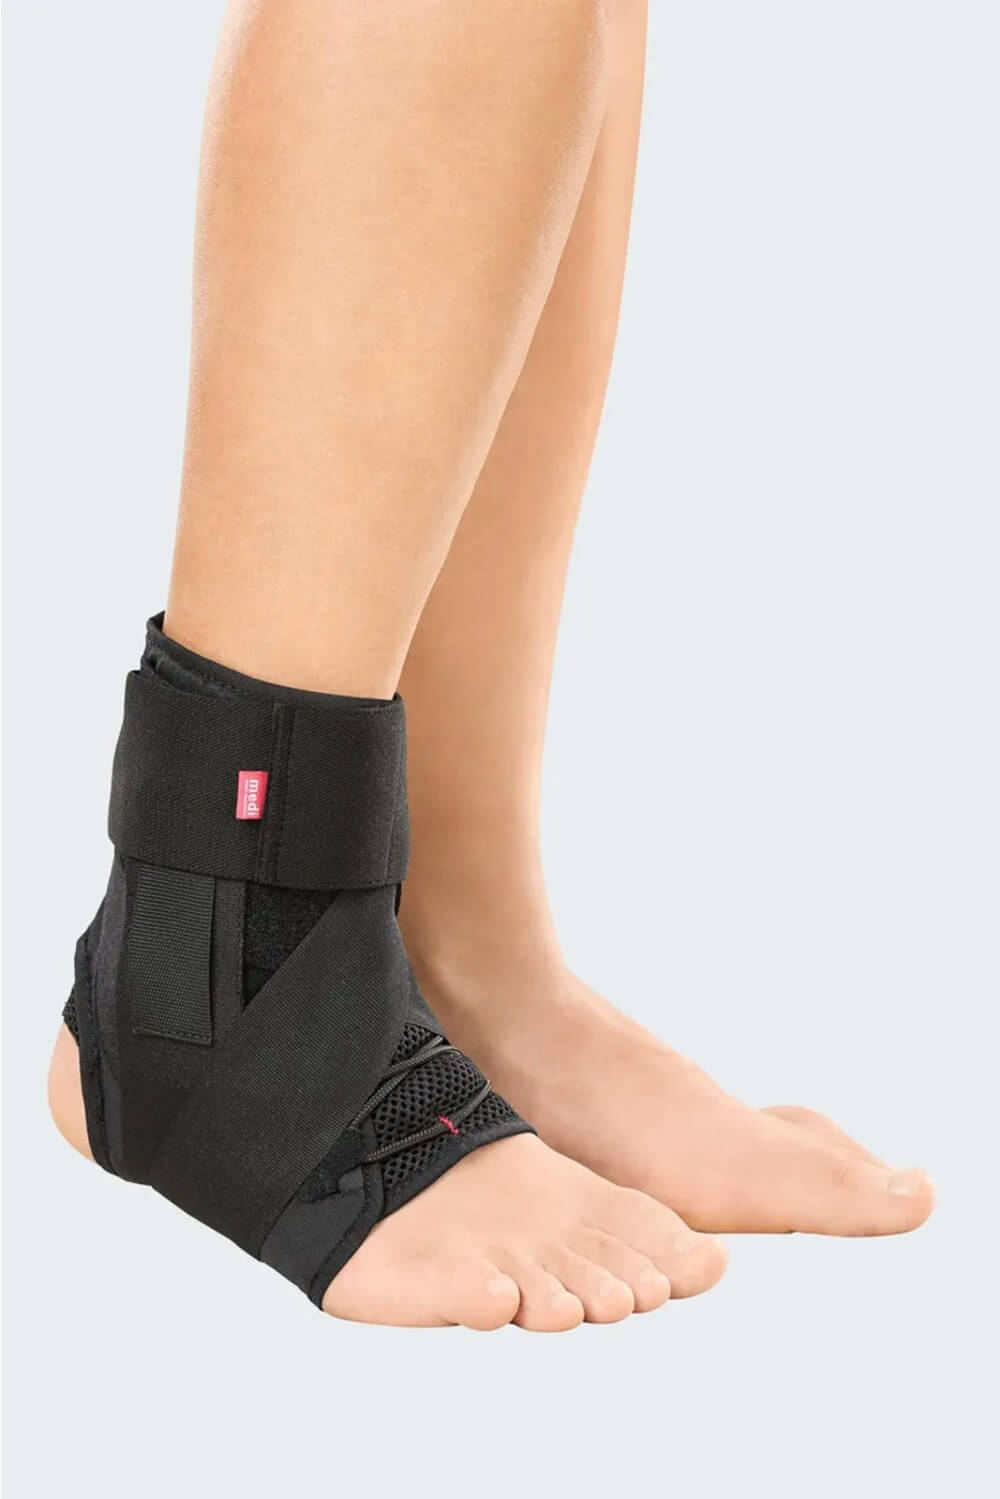 medi sports ankle brace with plastic stays